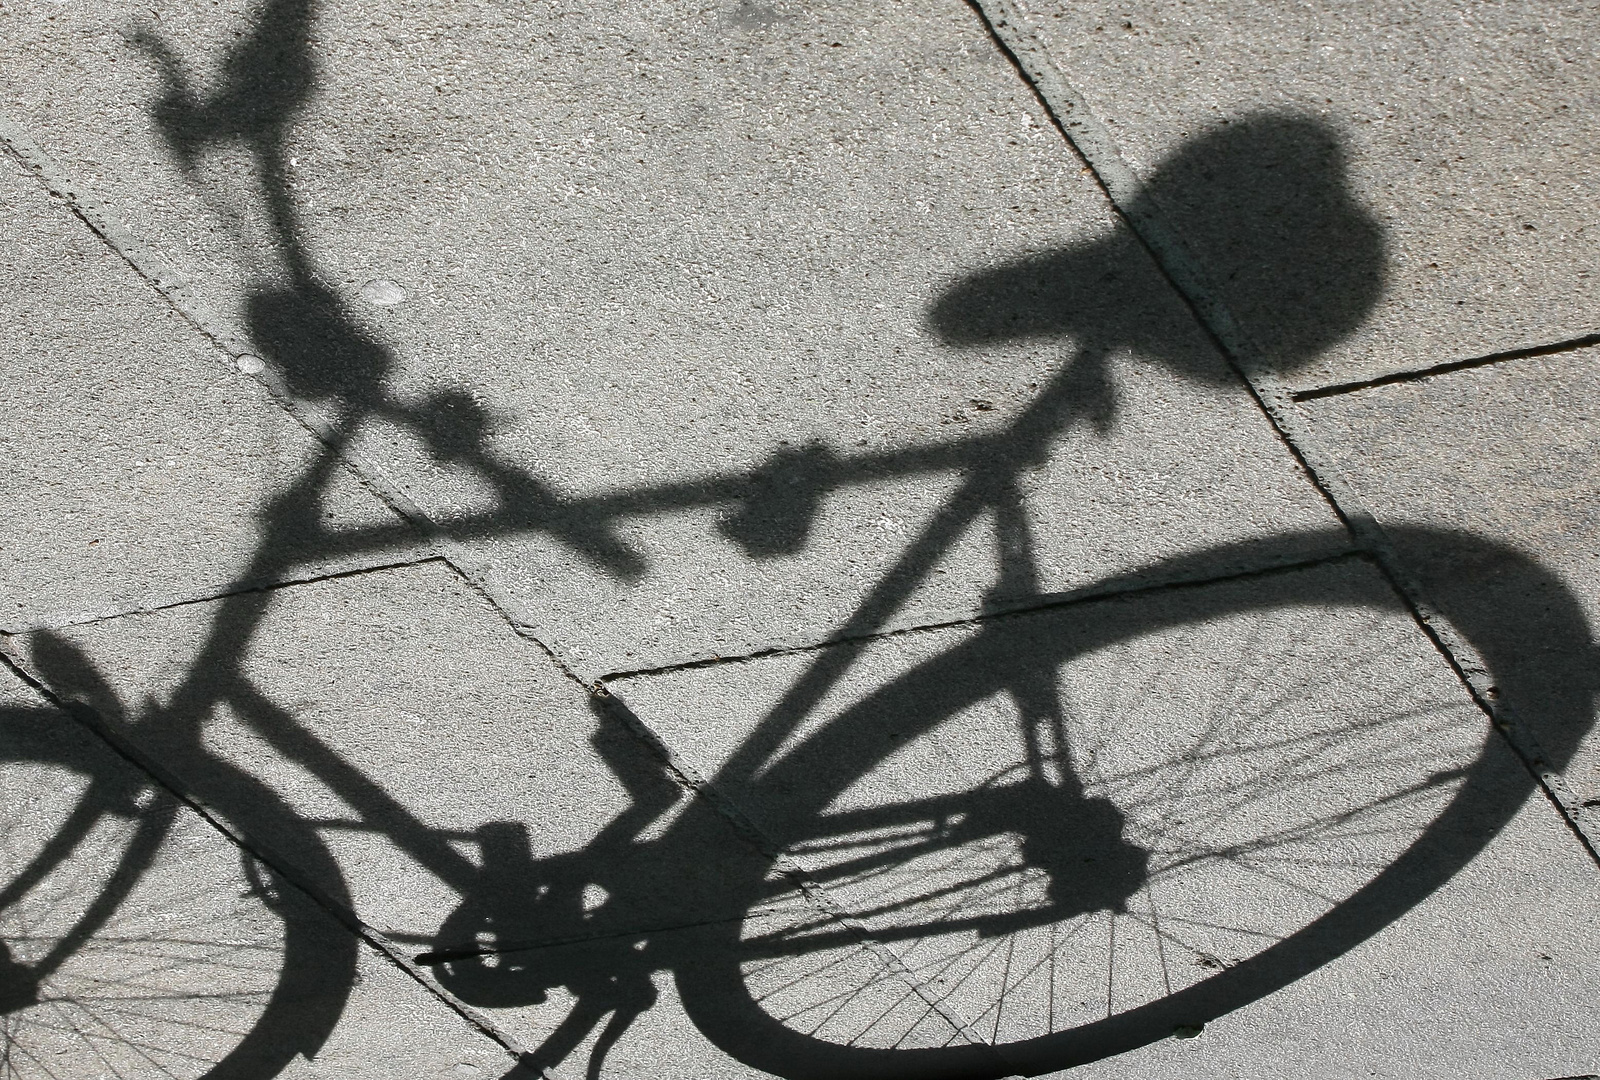 Shadow-Bike on standby